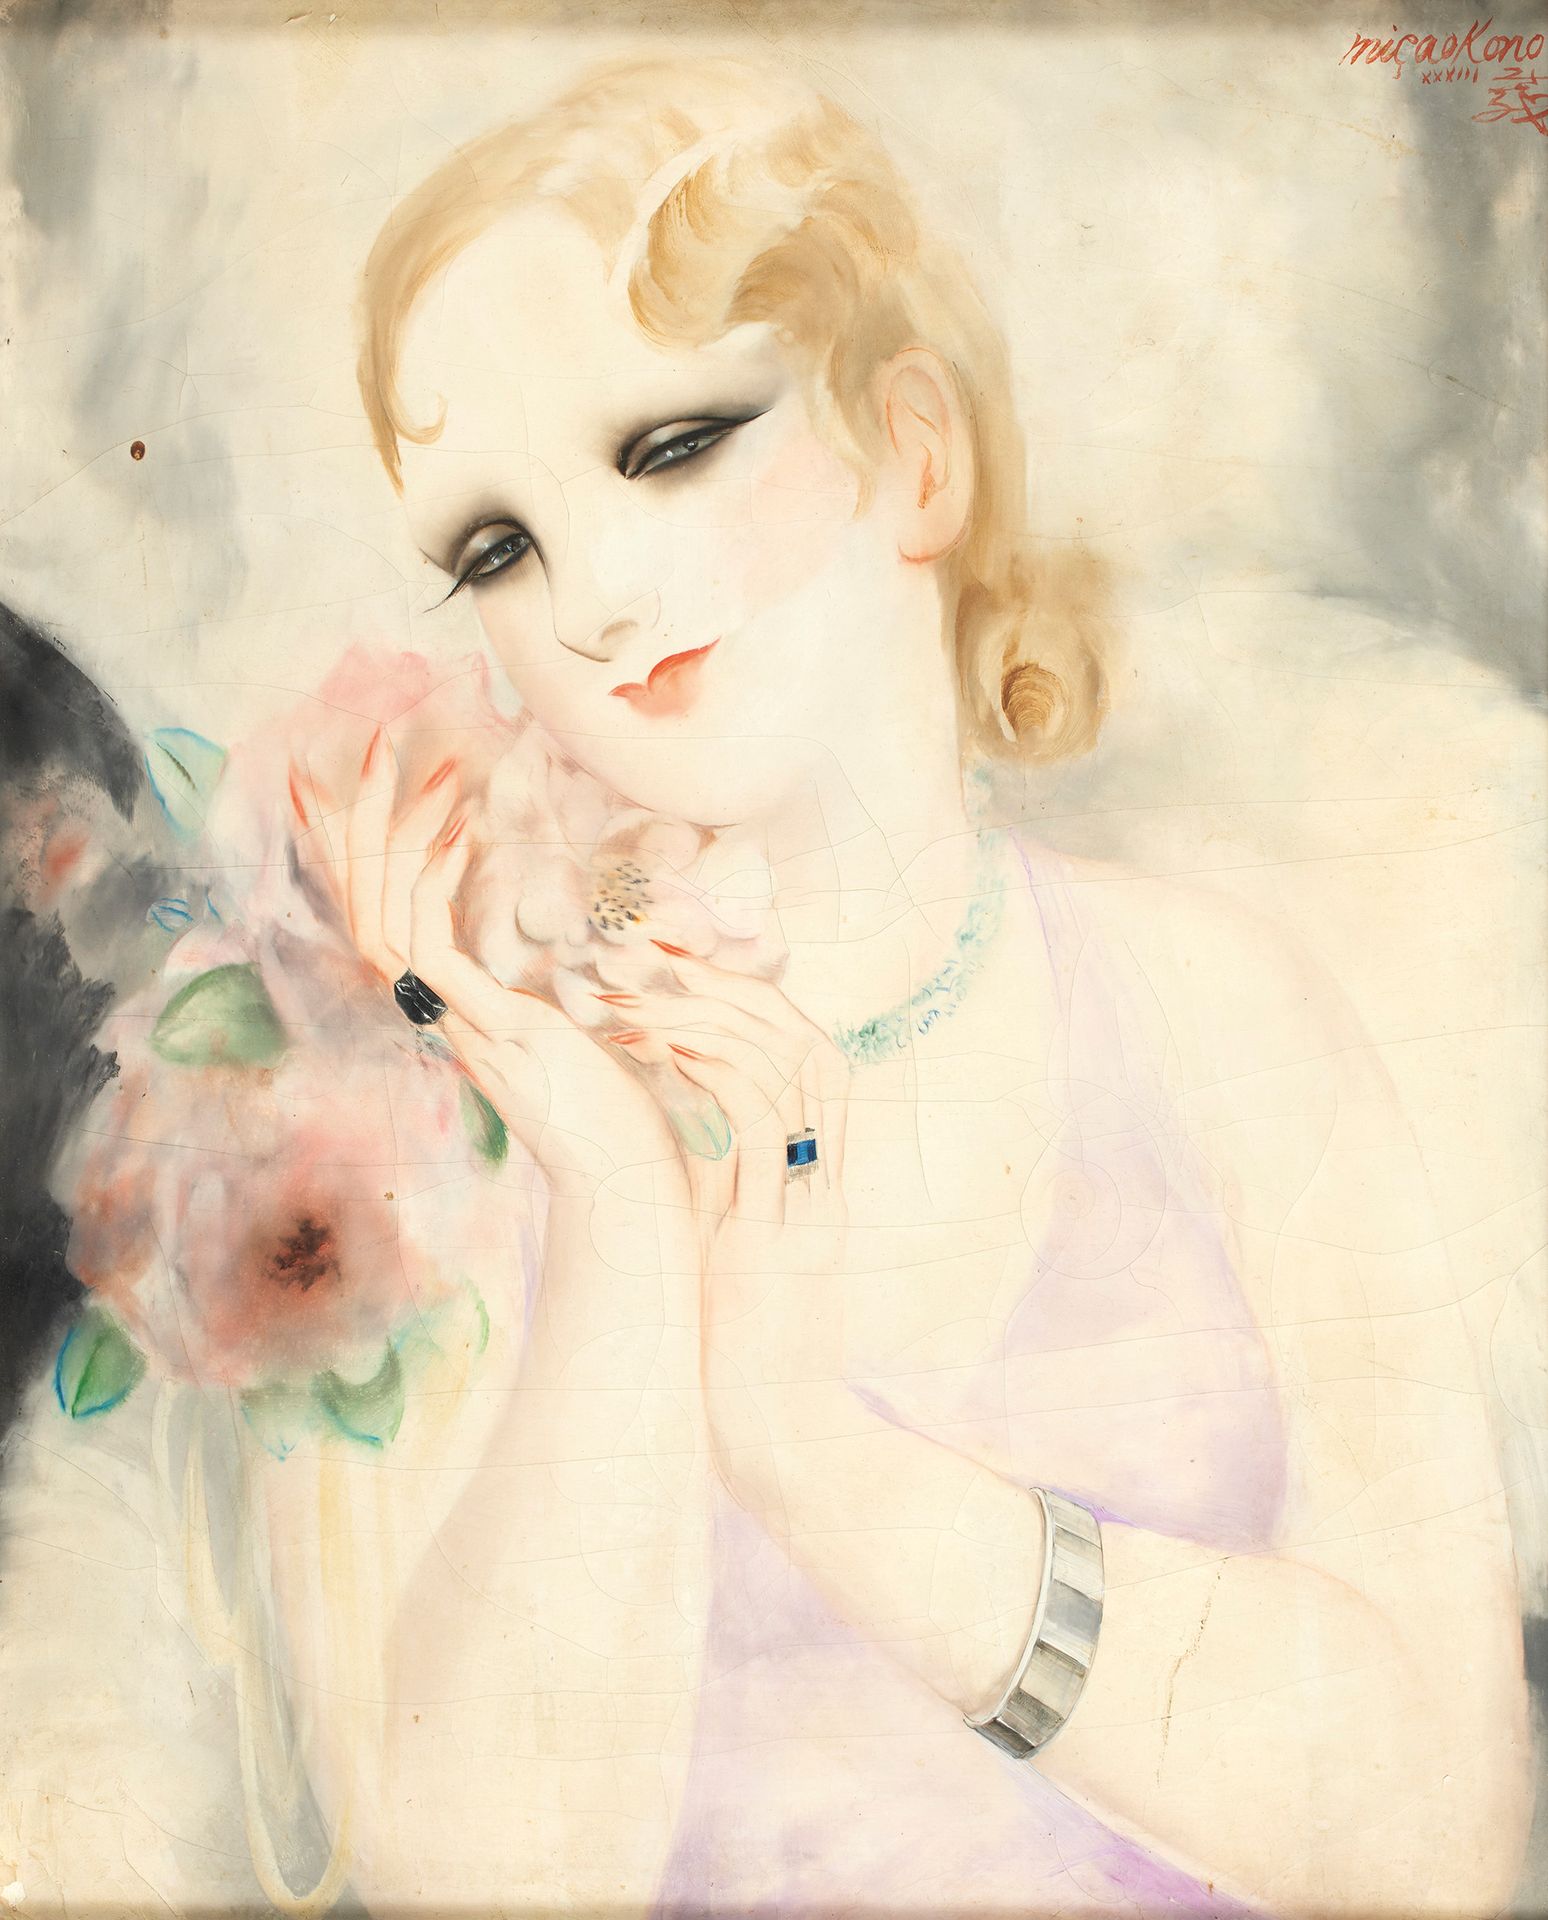 Micao KONO (1876-1954) Micao KONO (1876-1954)
Woman with flowers, 1933
Oil on ca&hellip;